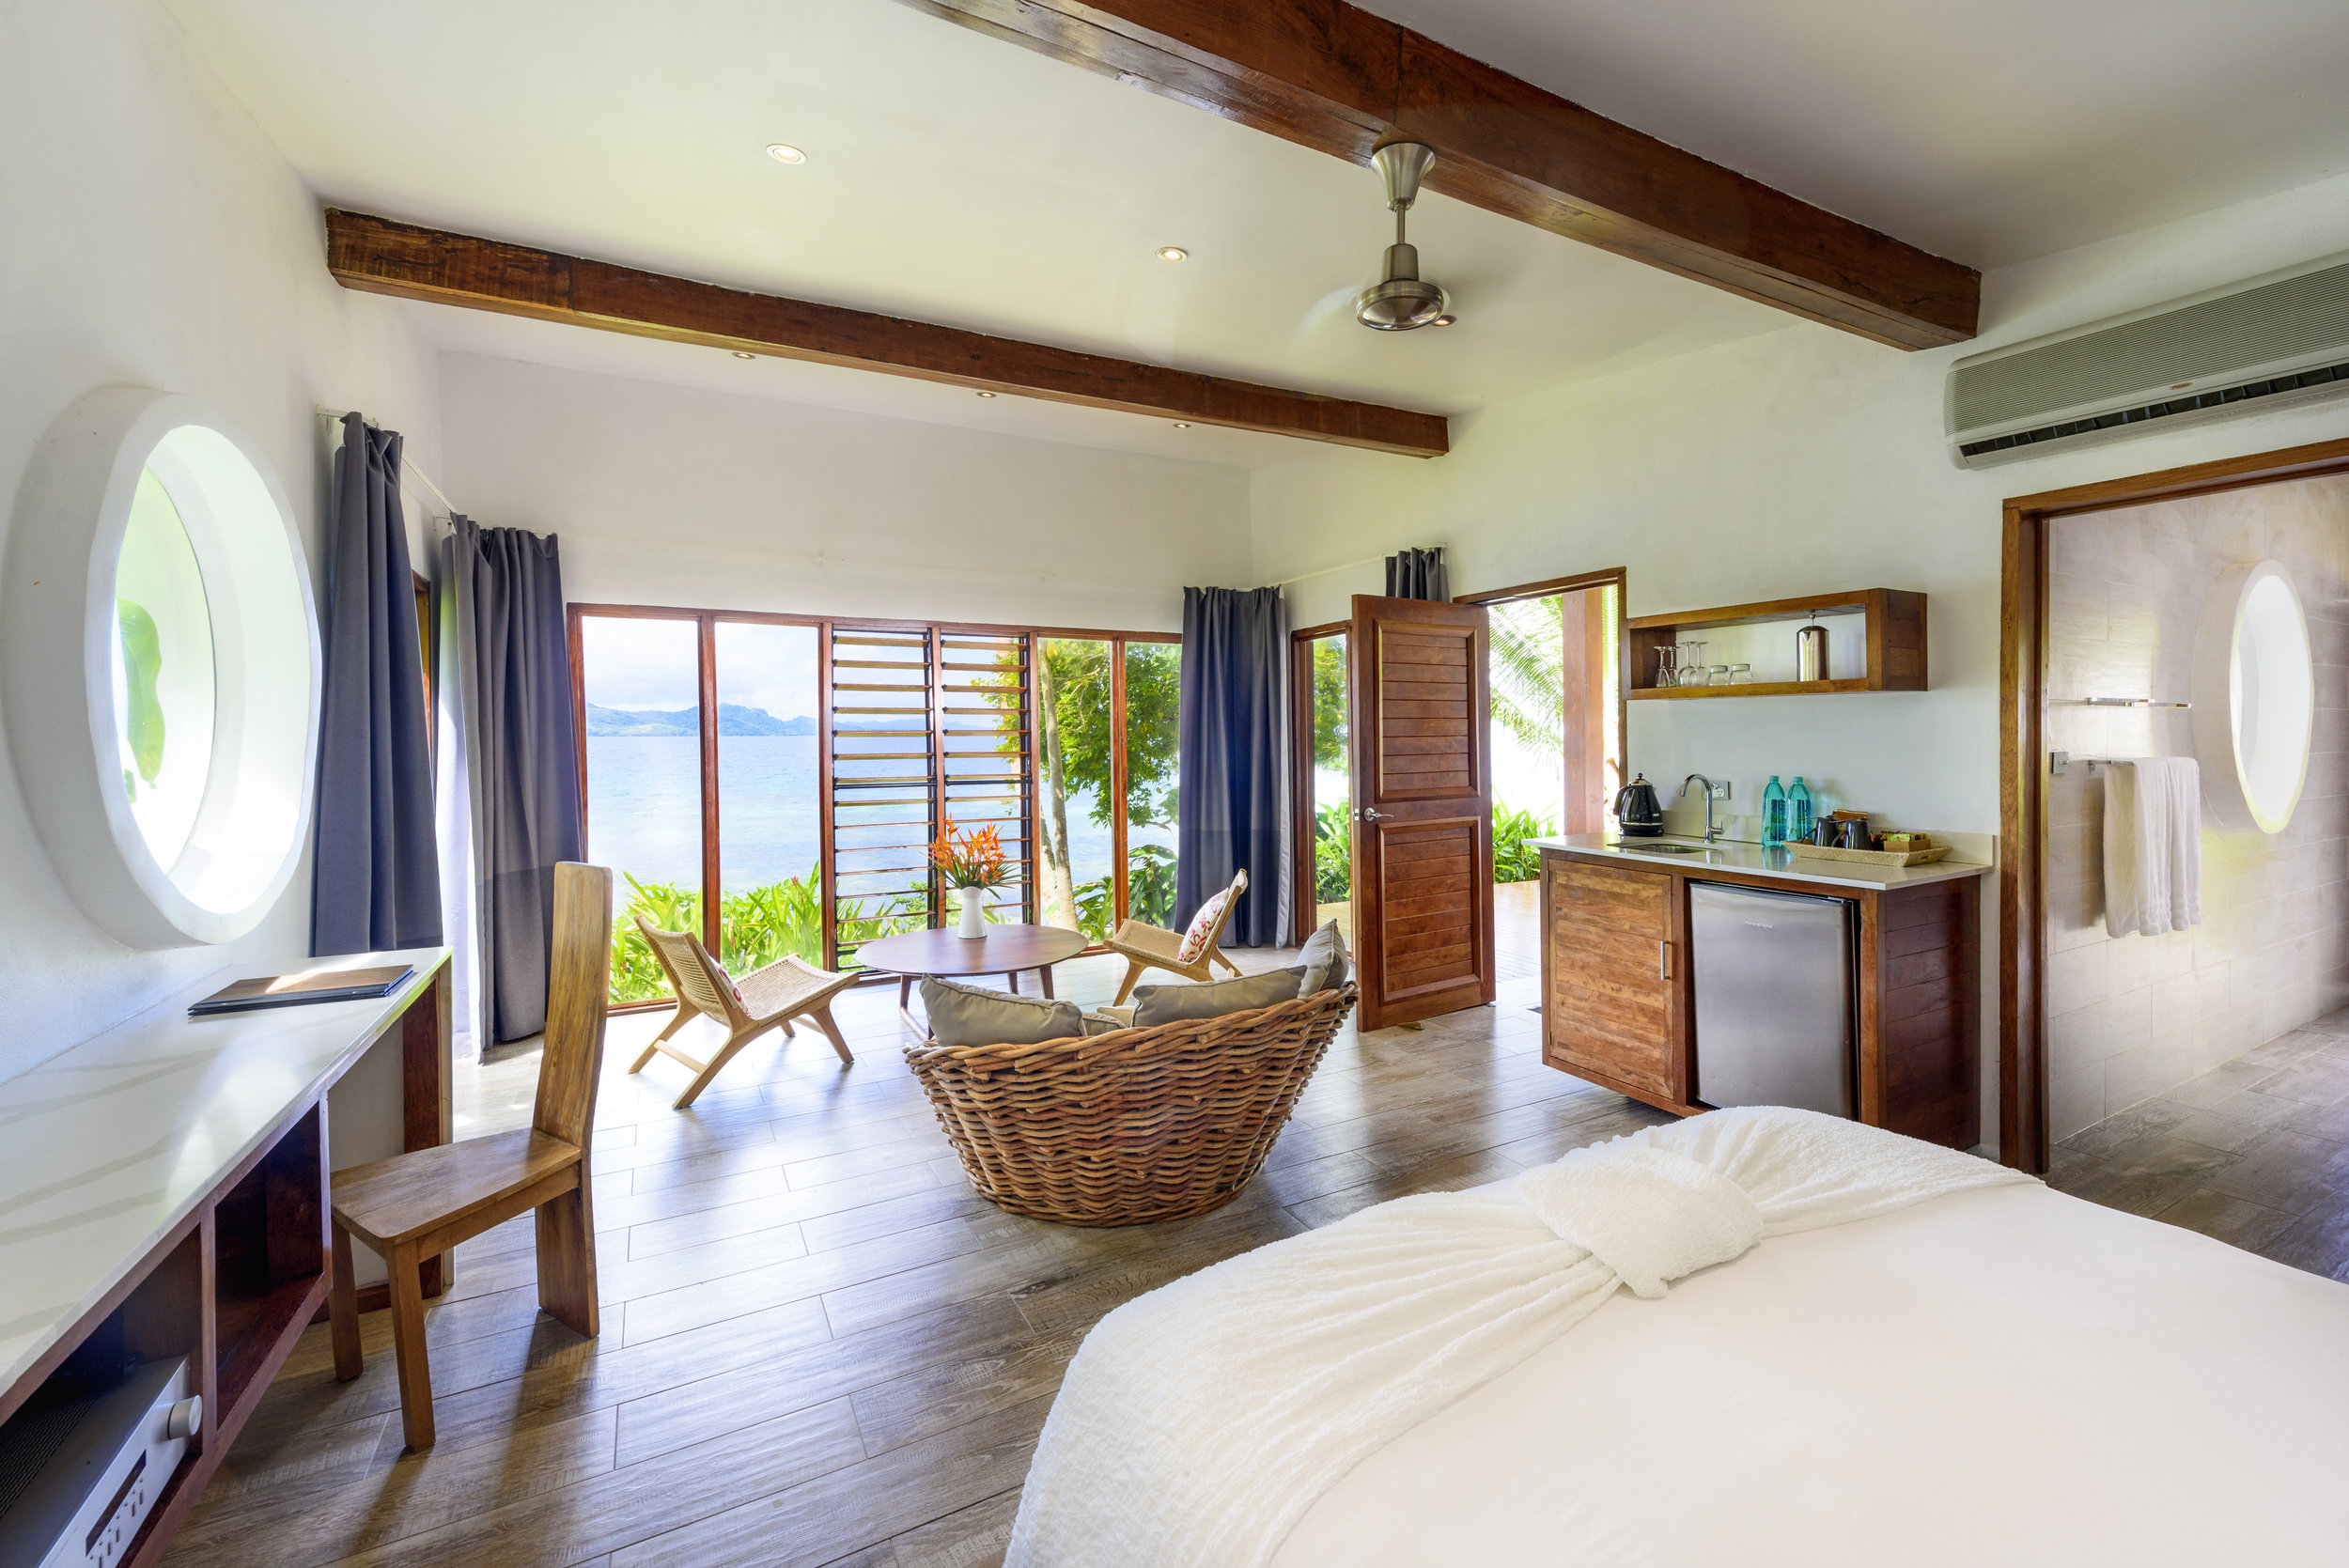 Royal Retreat bedroom with ocean view, The Remote Resort Fiji Islands